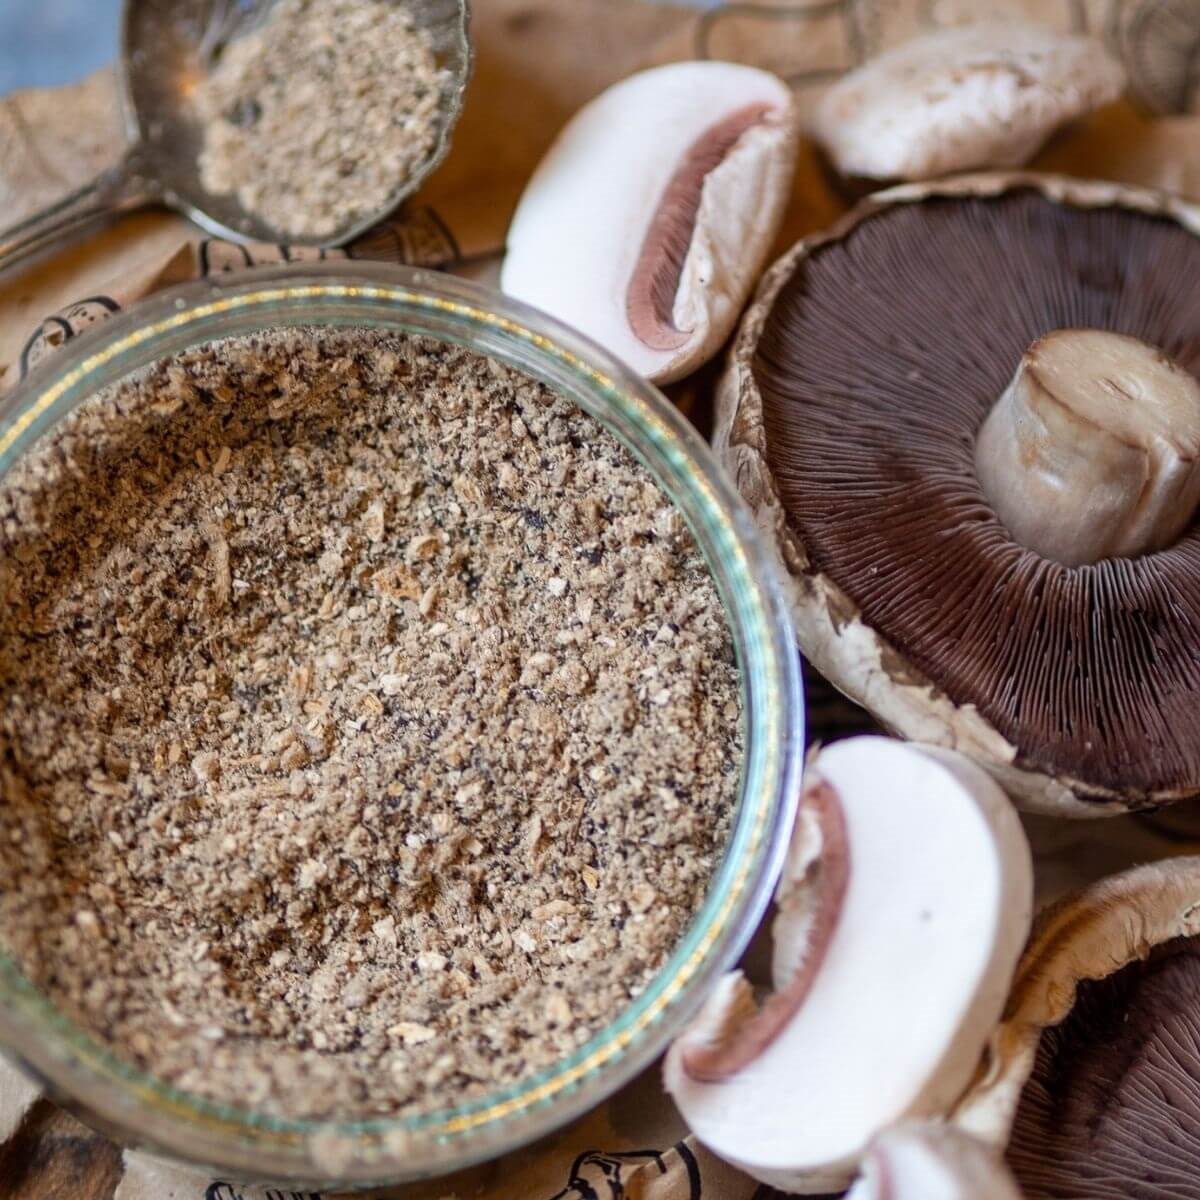 https://modernveganguide.com.au/wp-content/uploads/2022/06/dehydrated-mushroom-powder-seasoning-modern-vegan-guide-1.jpg